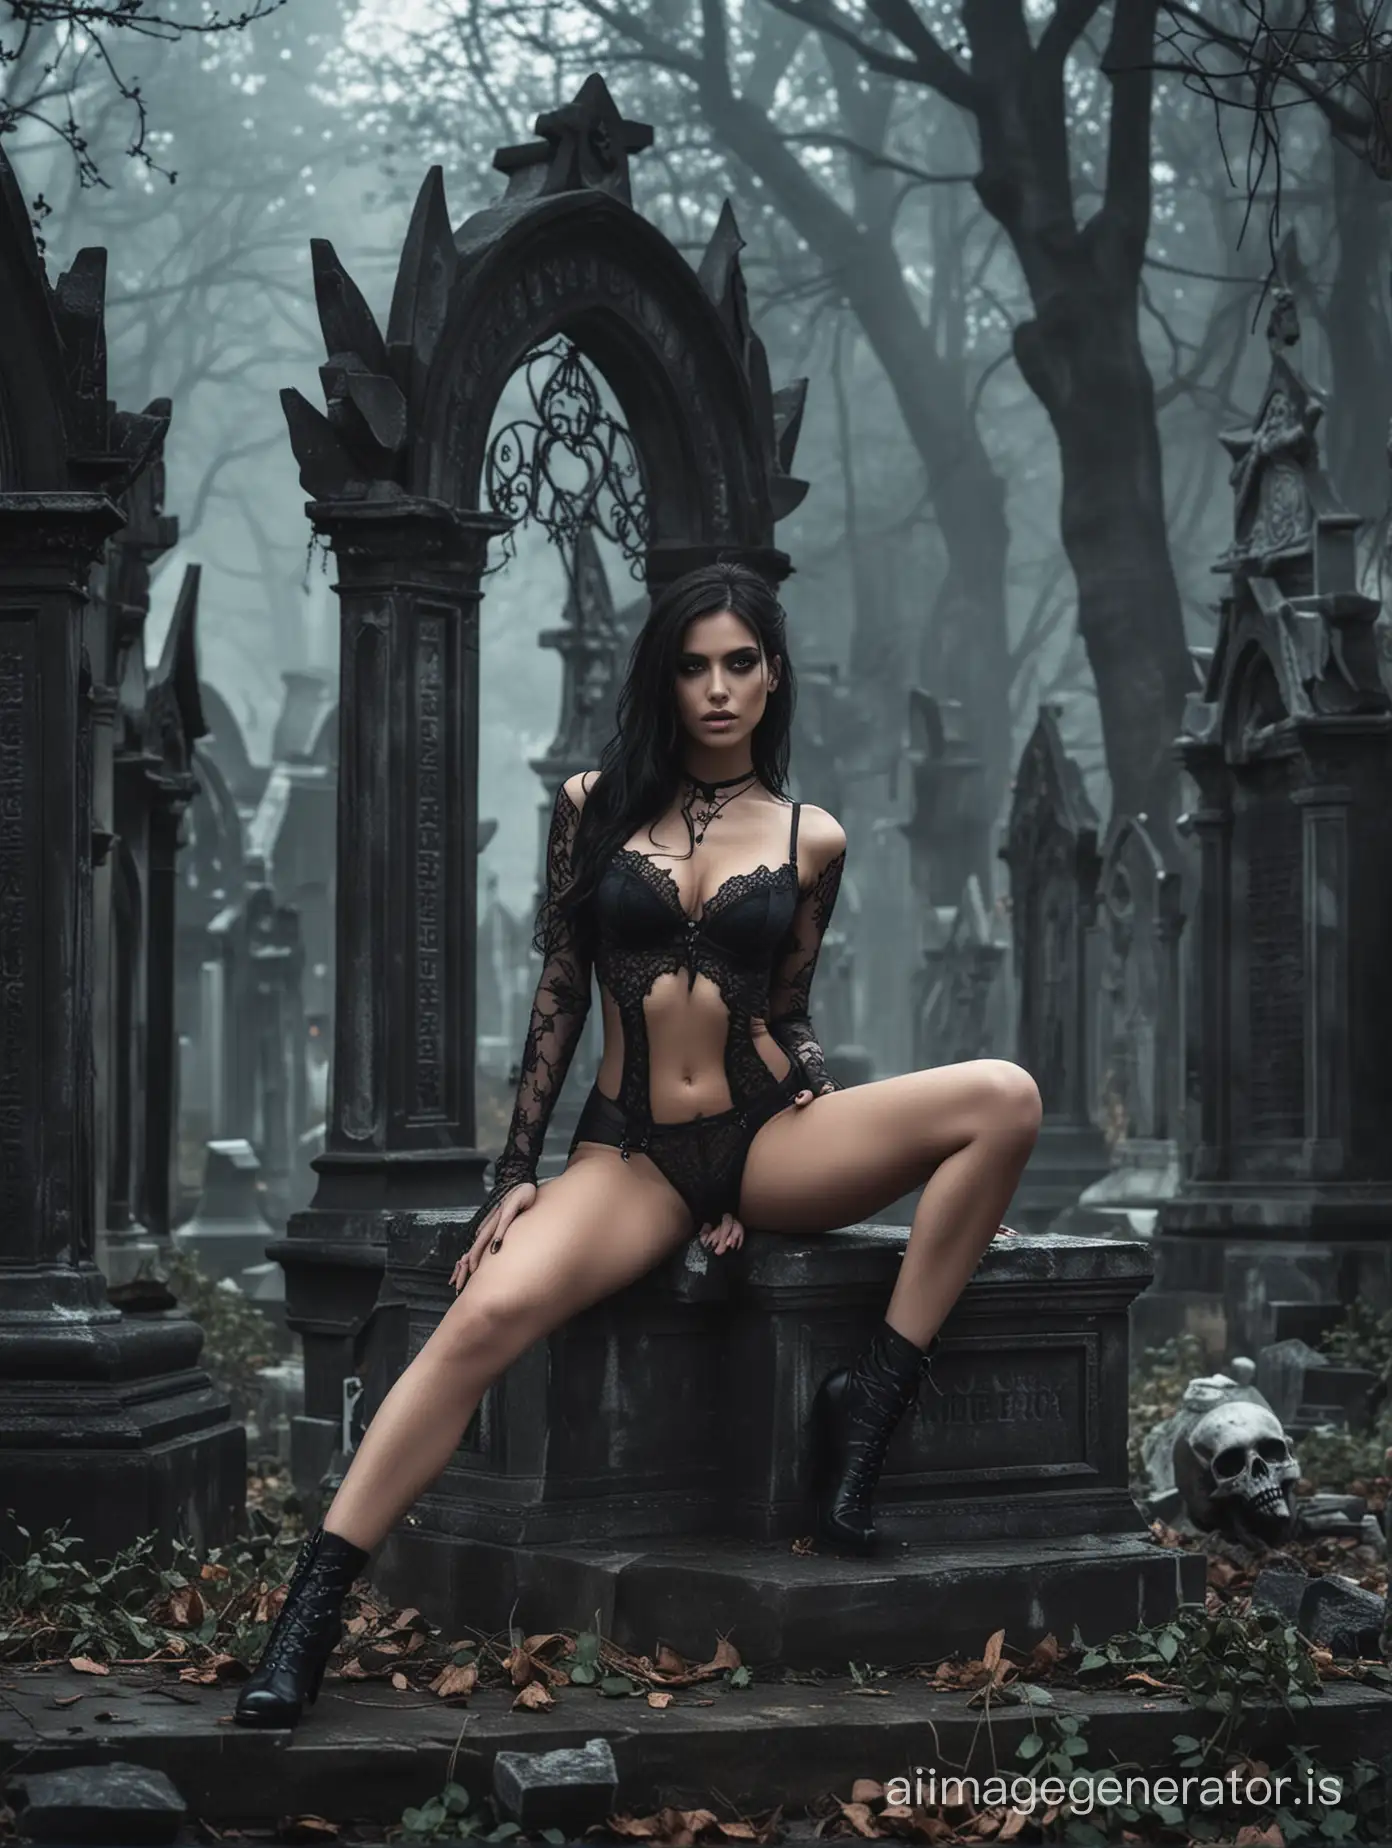 Seductive-Gothic-Model-in-Lingerie-Amidst-DemonFilled-Graveyard